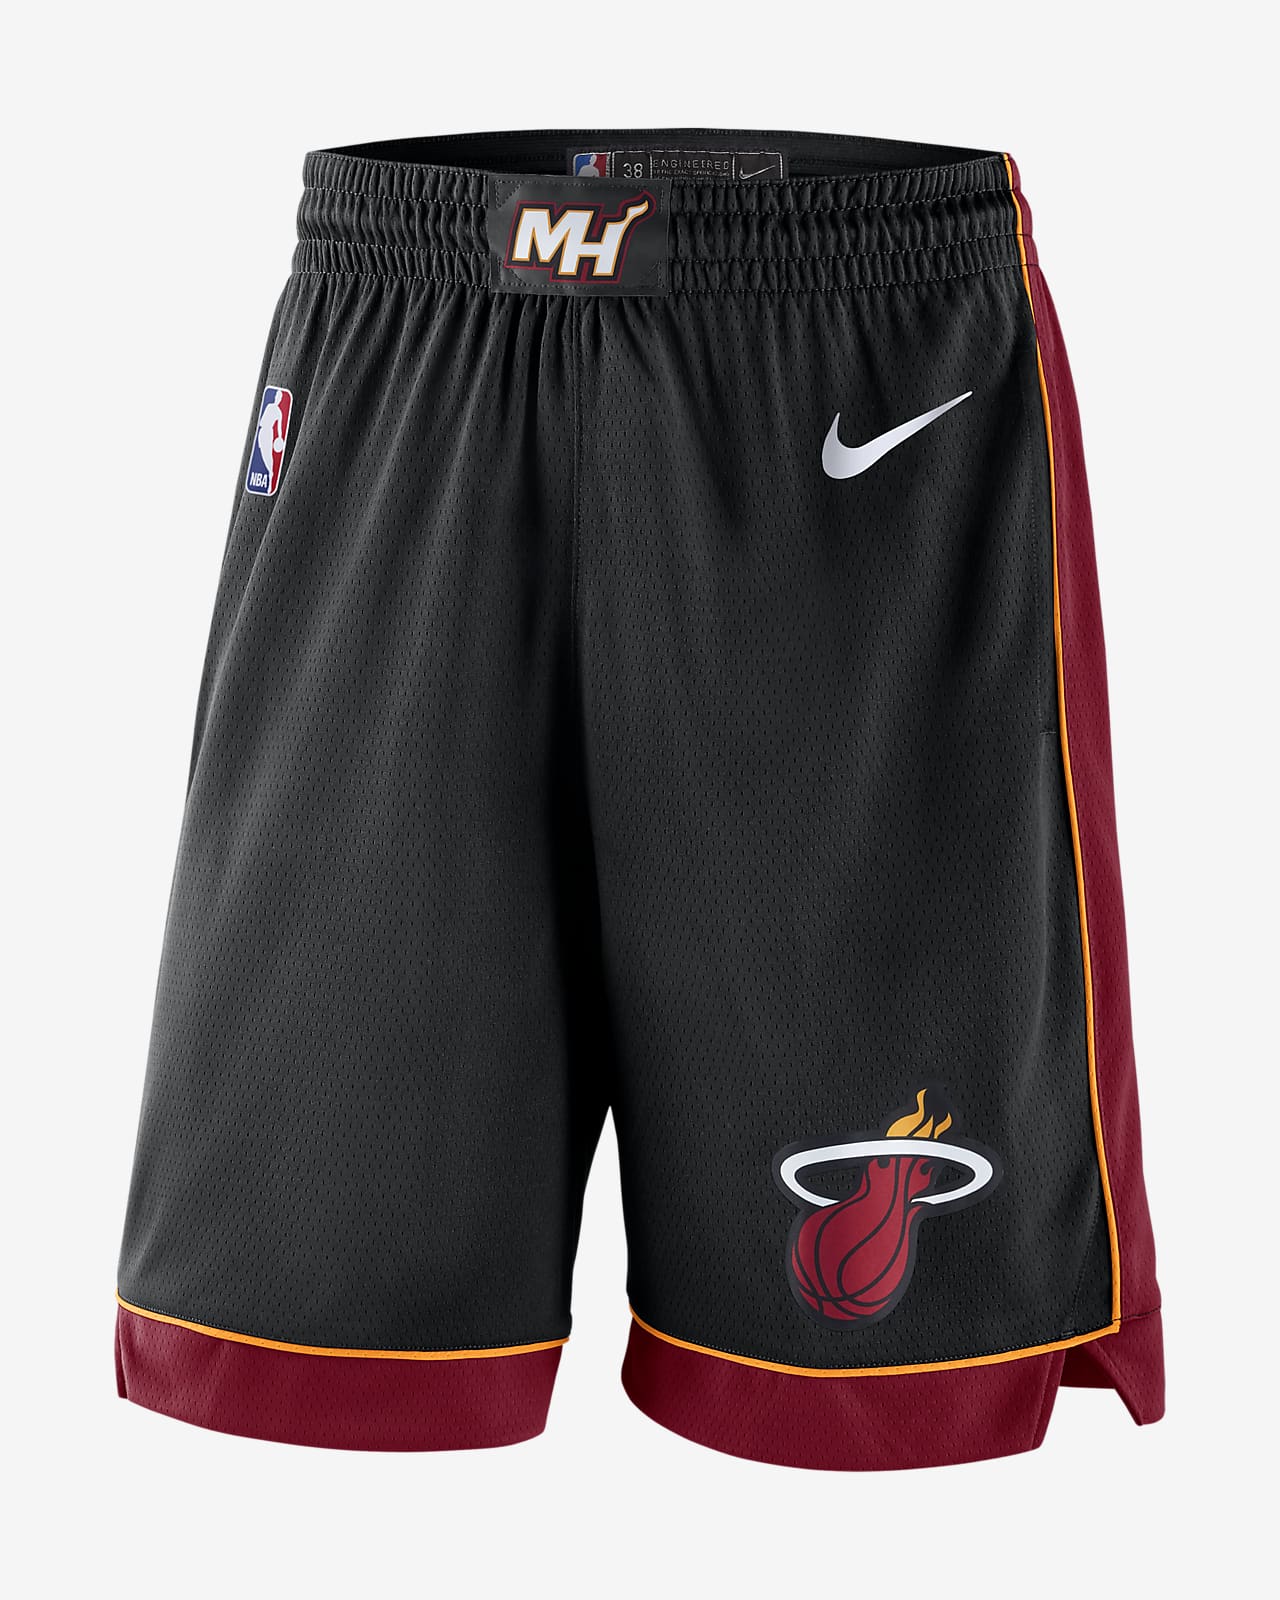 Retro Herren Miami Heat Stitched Basketball Swingman Shorts Sports S-2XL Neu 